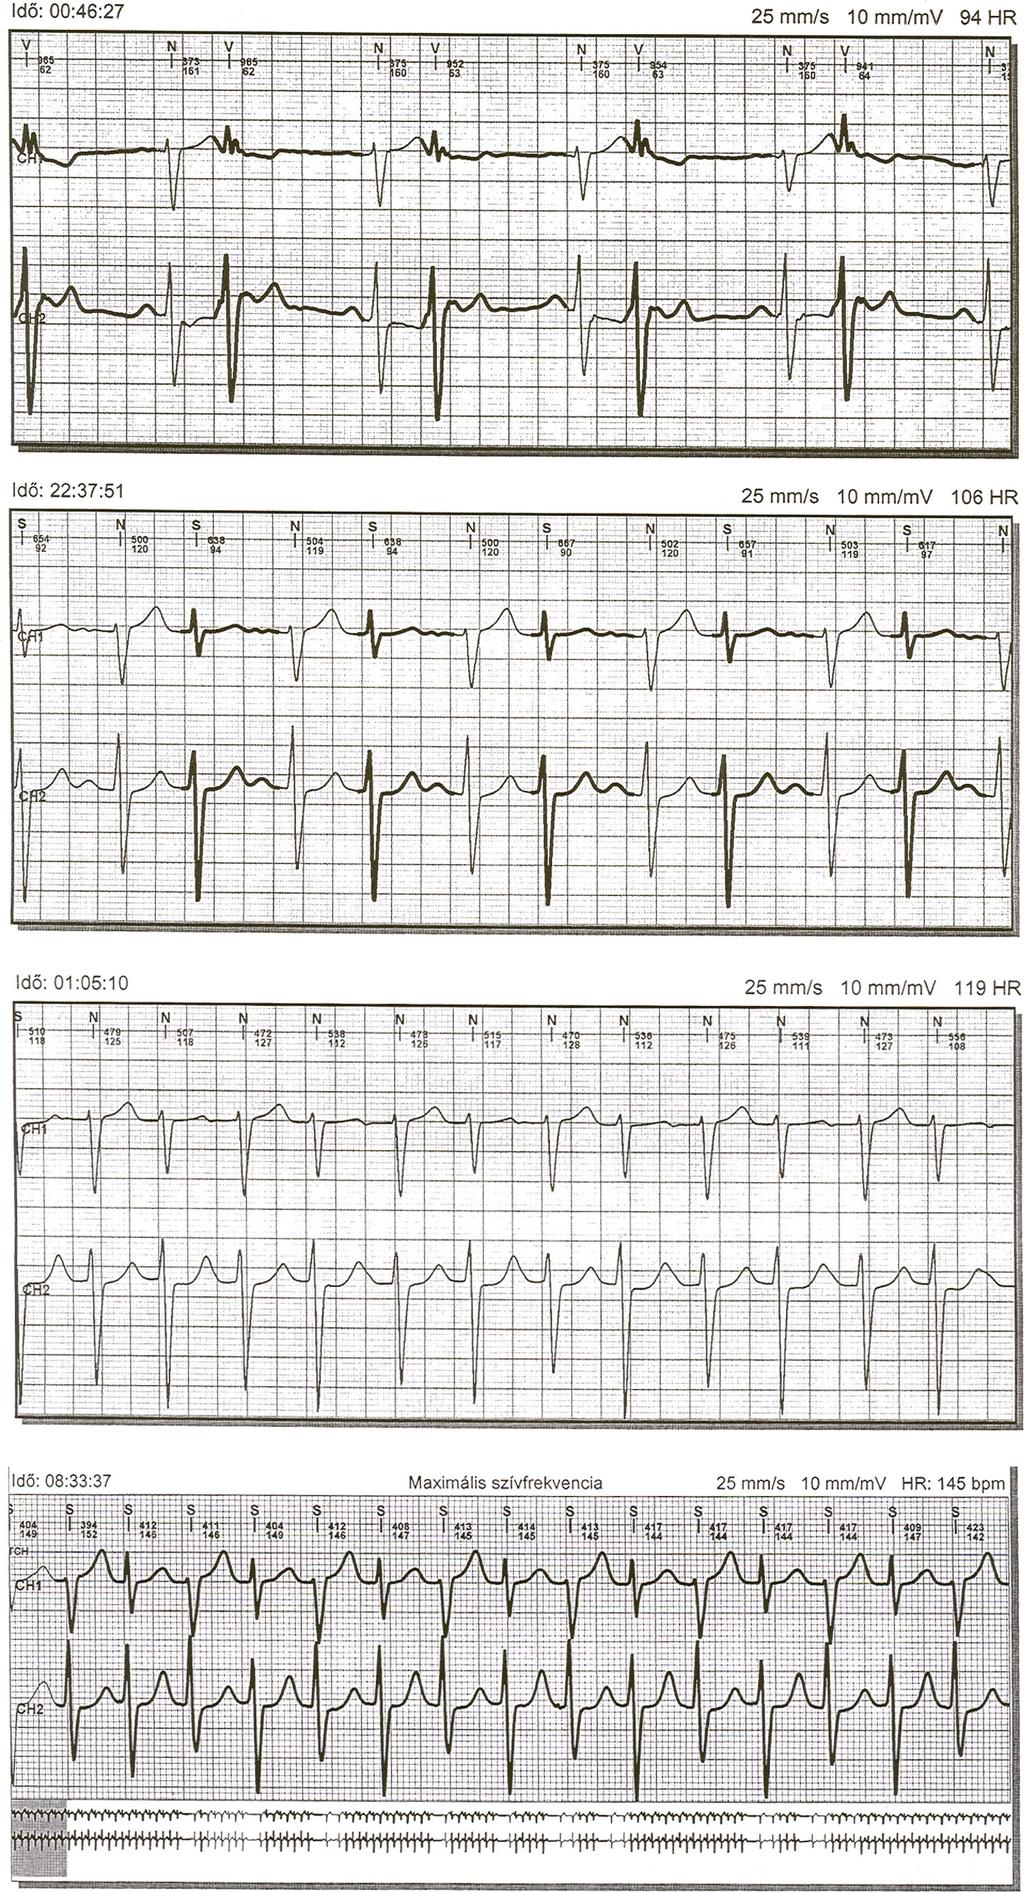 194 Vereckei A & Gellér L. Dual AV nodal nonreentrant tachycardia Figure 1.